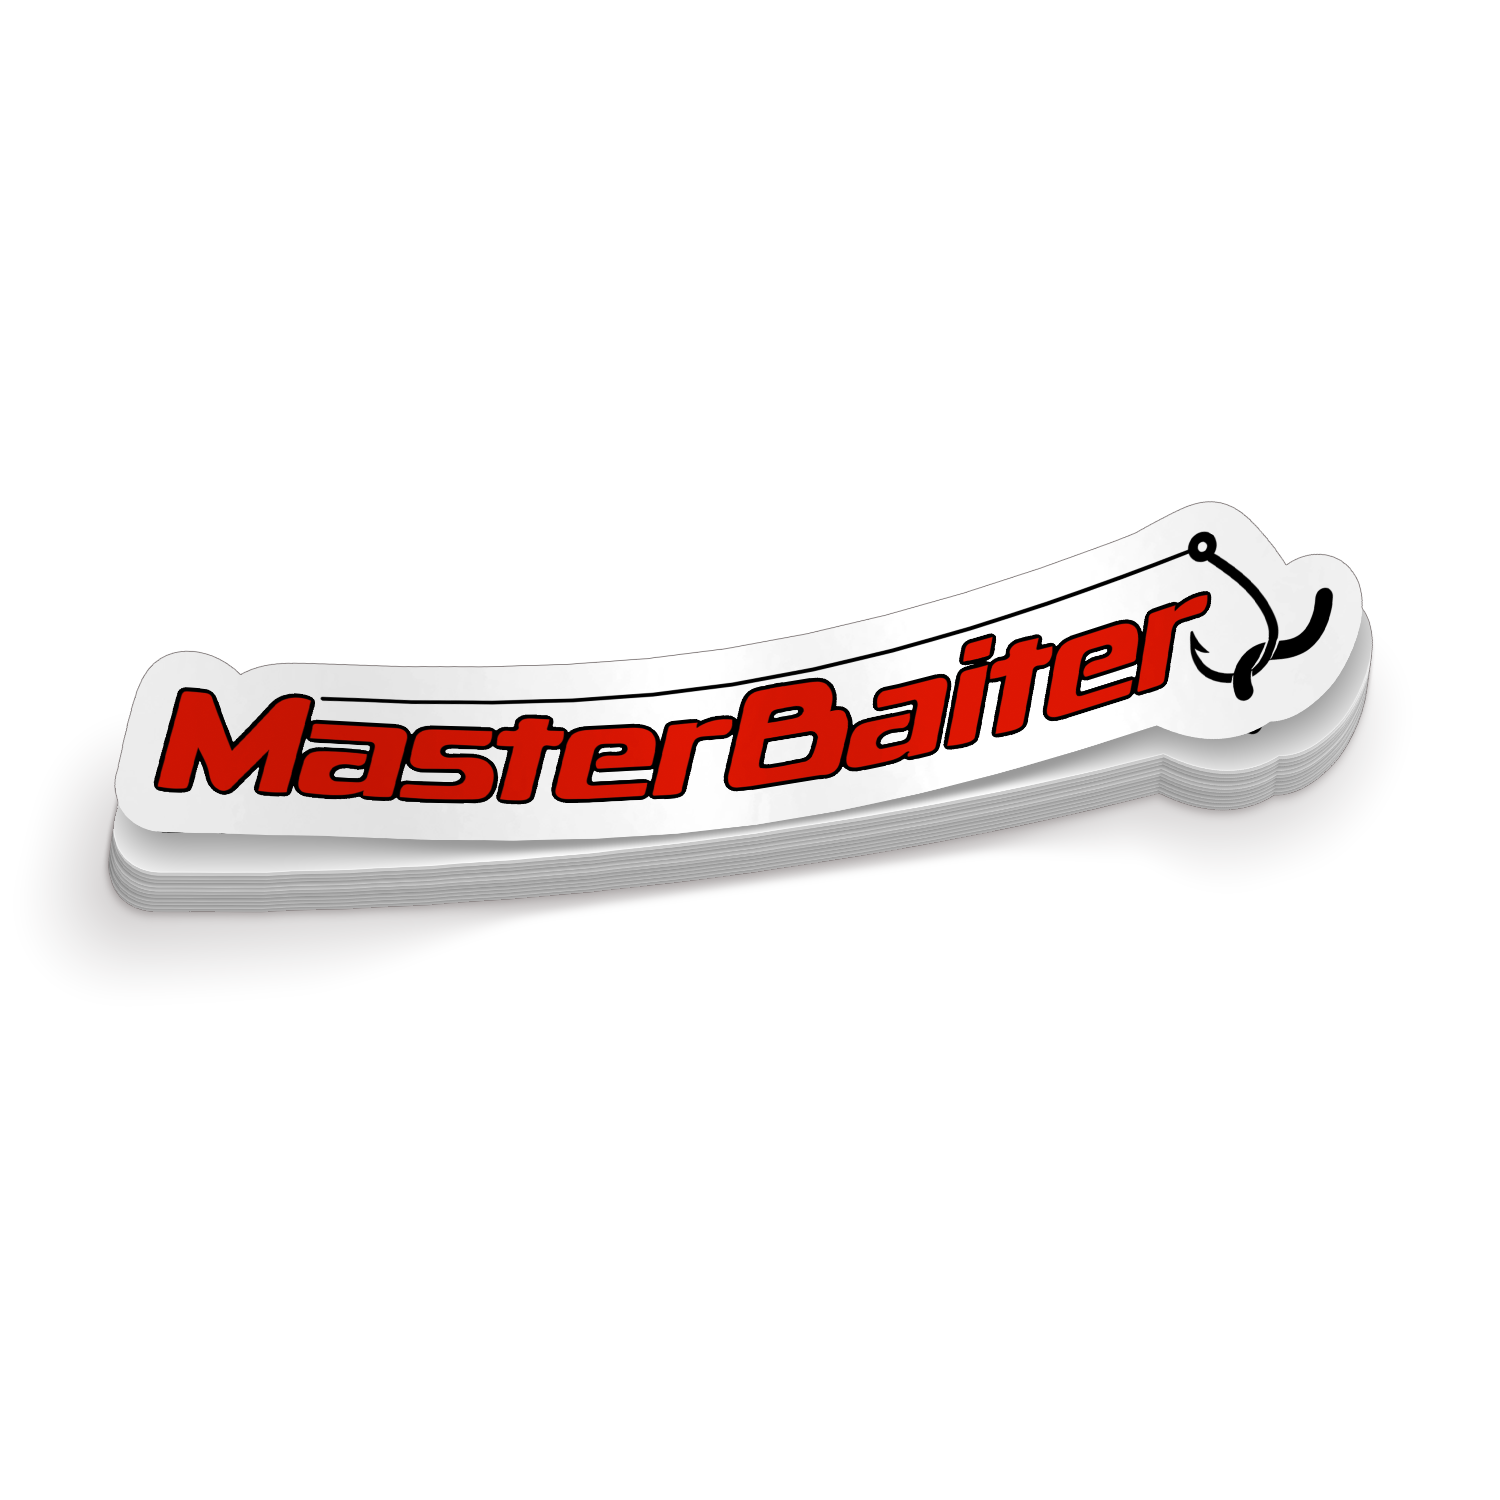 MasterBaiter - Funny Fishing Sticker